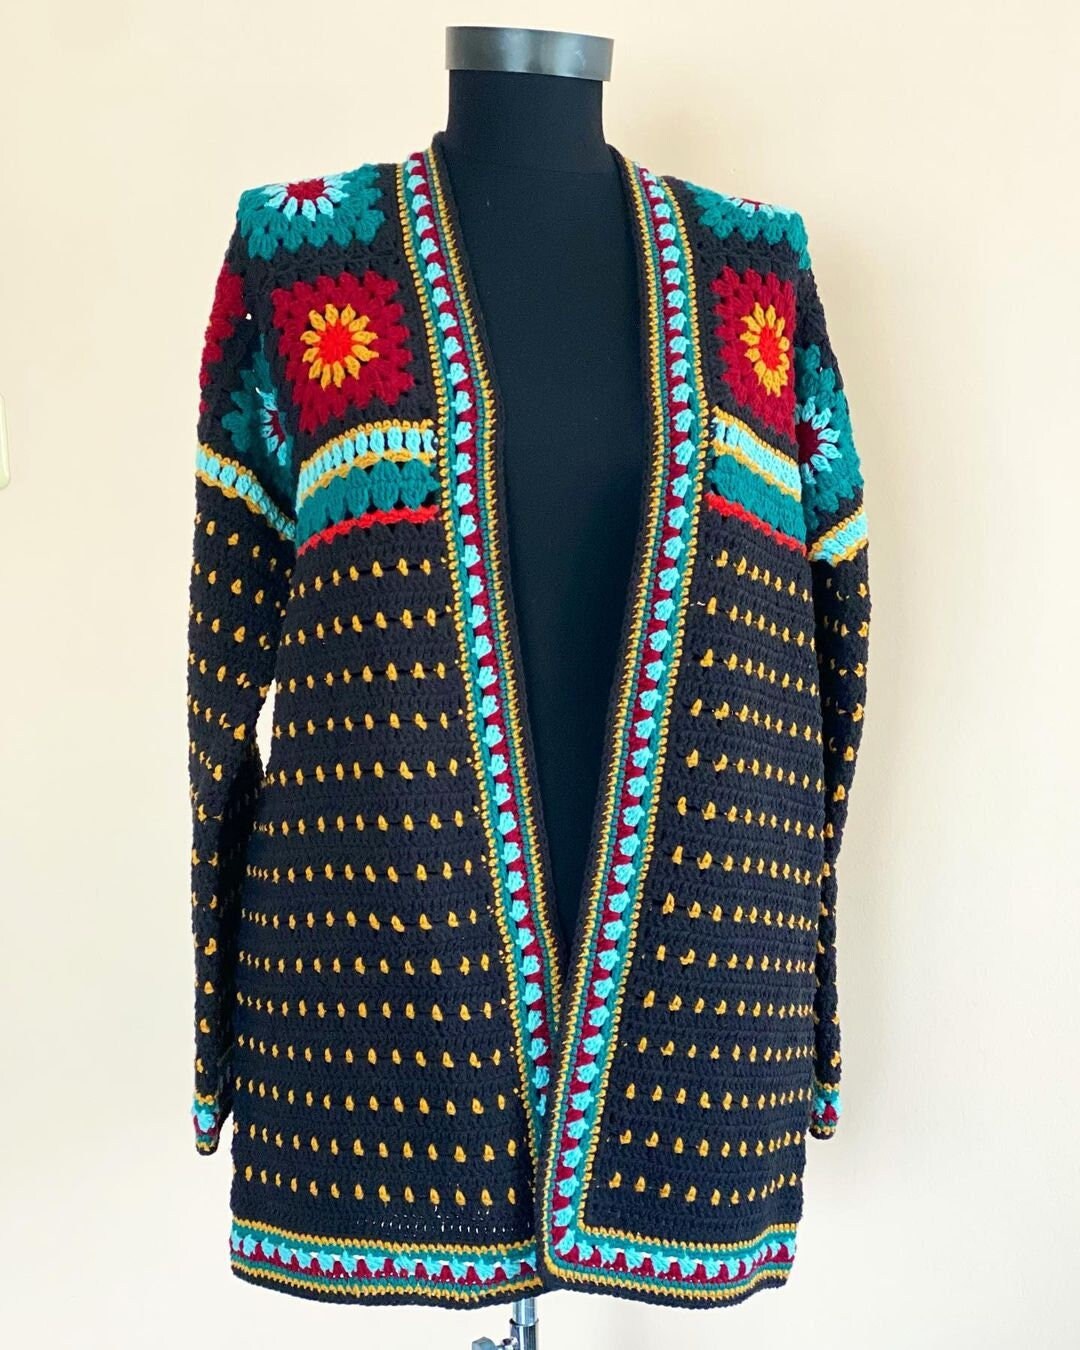 Multicolor Crochet Cardigangift Ideassummer Clothingmotif - Etsy